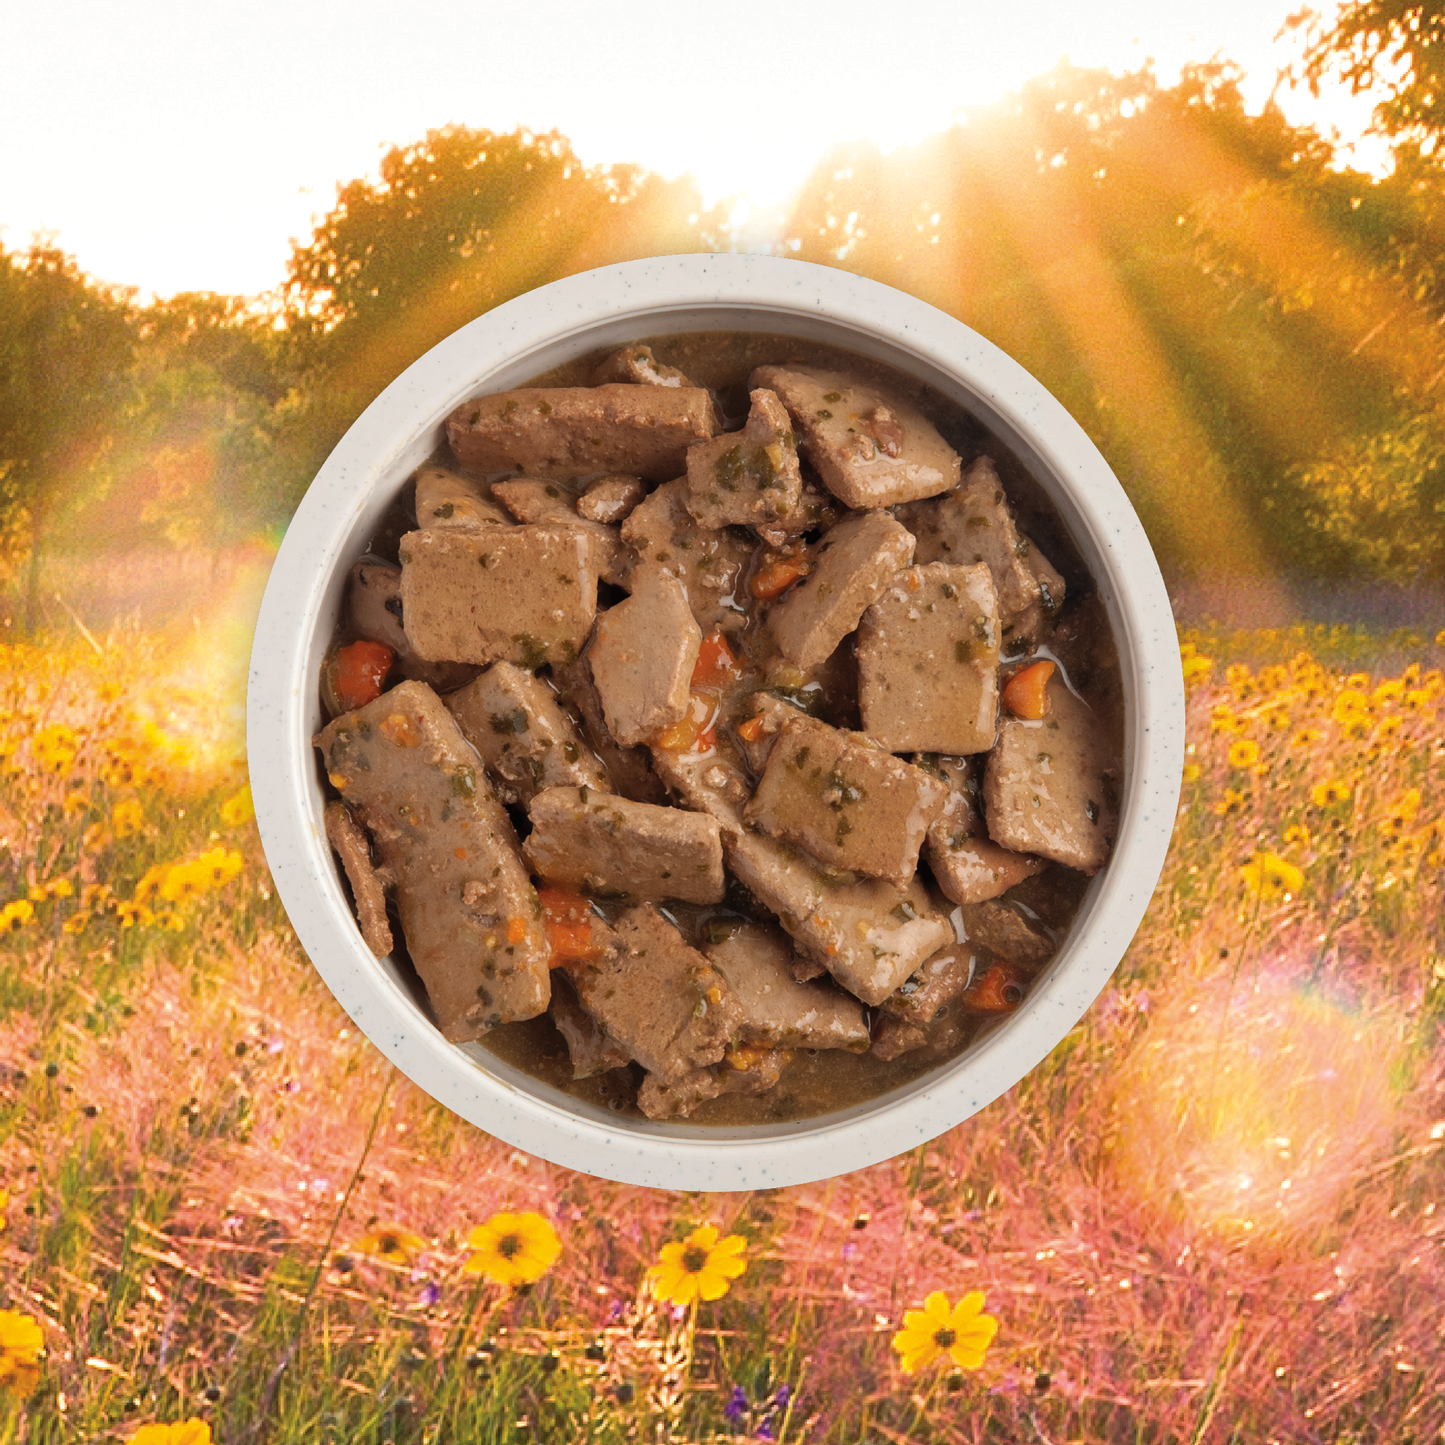 Acana Wet Dog Food Lamb Recipe In Bone Broth  Canned Dog Food  | PetMax Canada